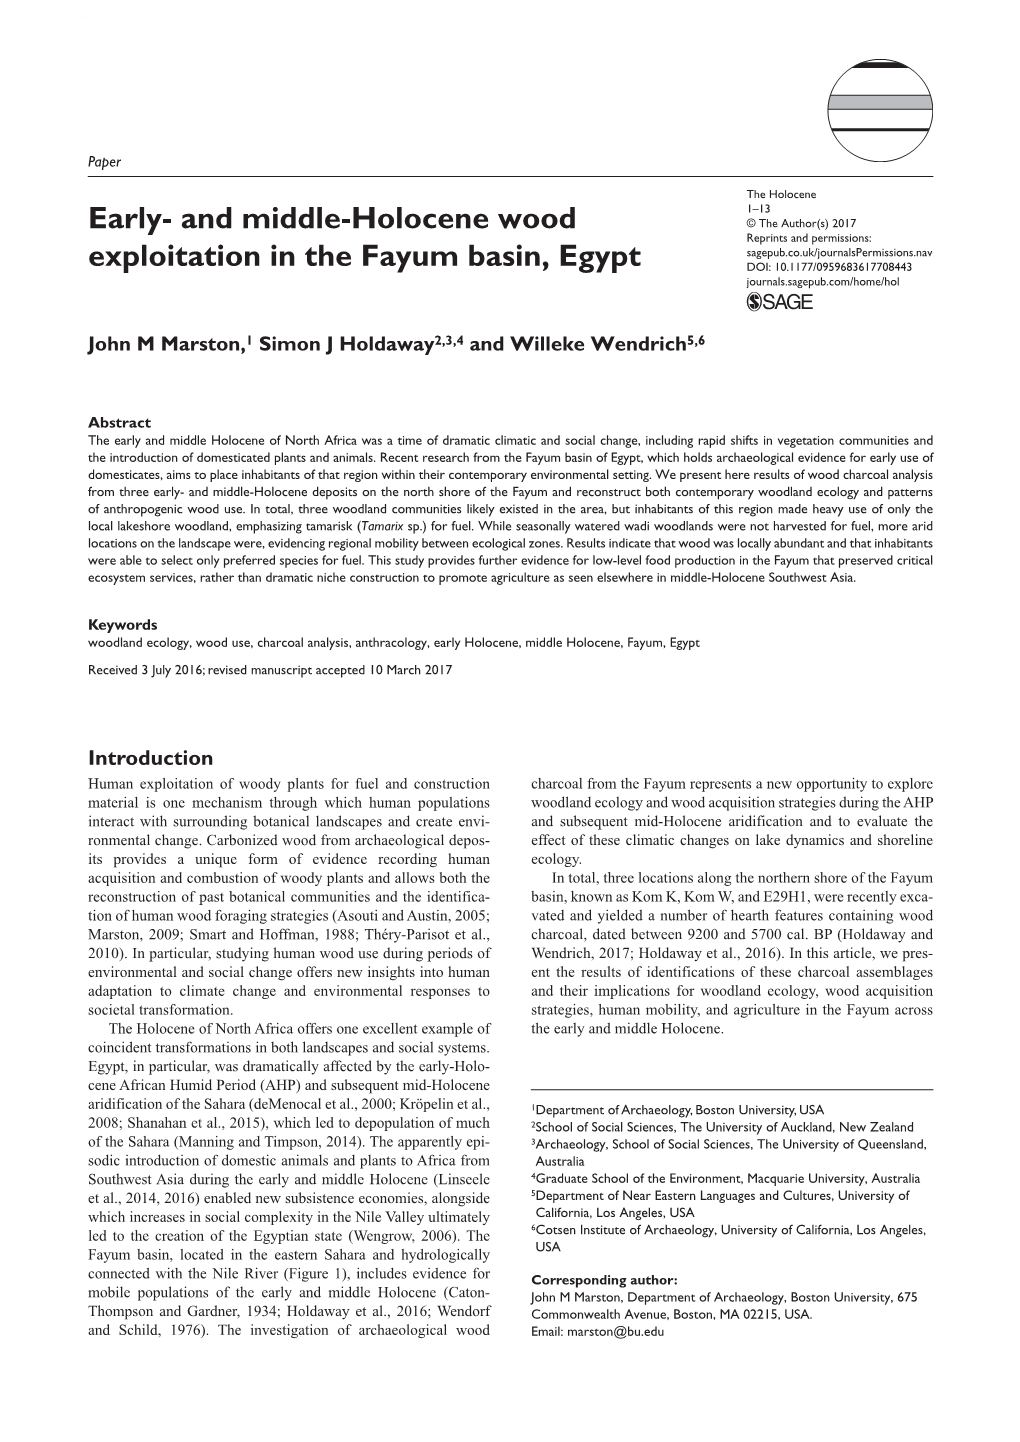 Early- and Middle-Holocene Wood Exploitation in the Fayum Basin, Egypt